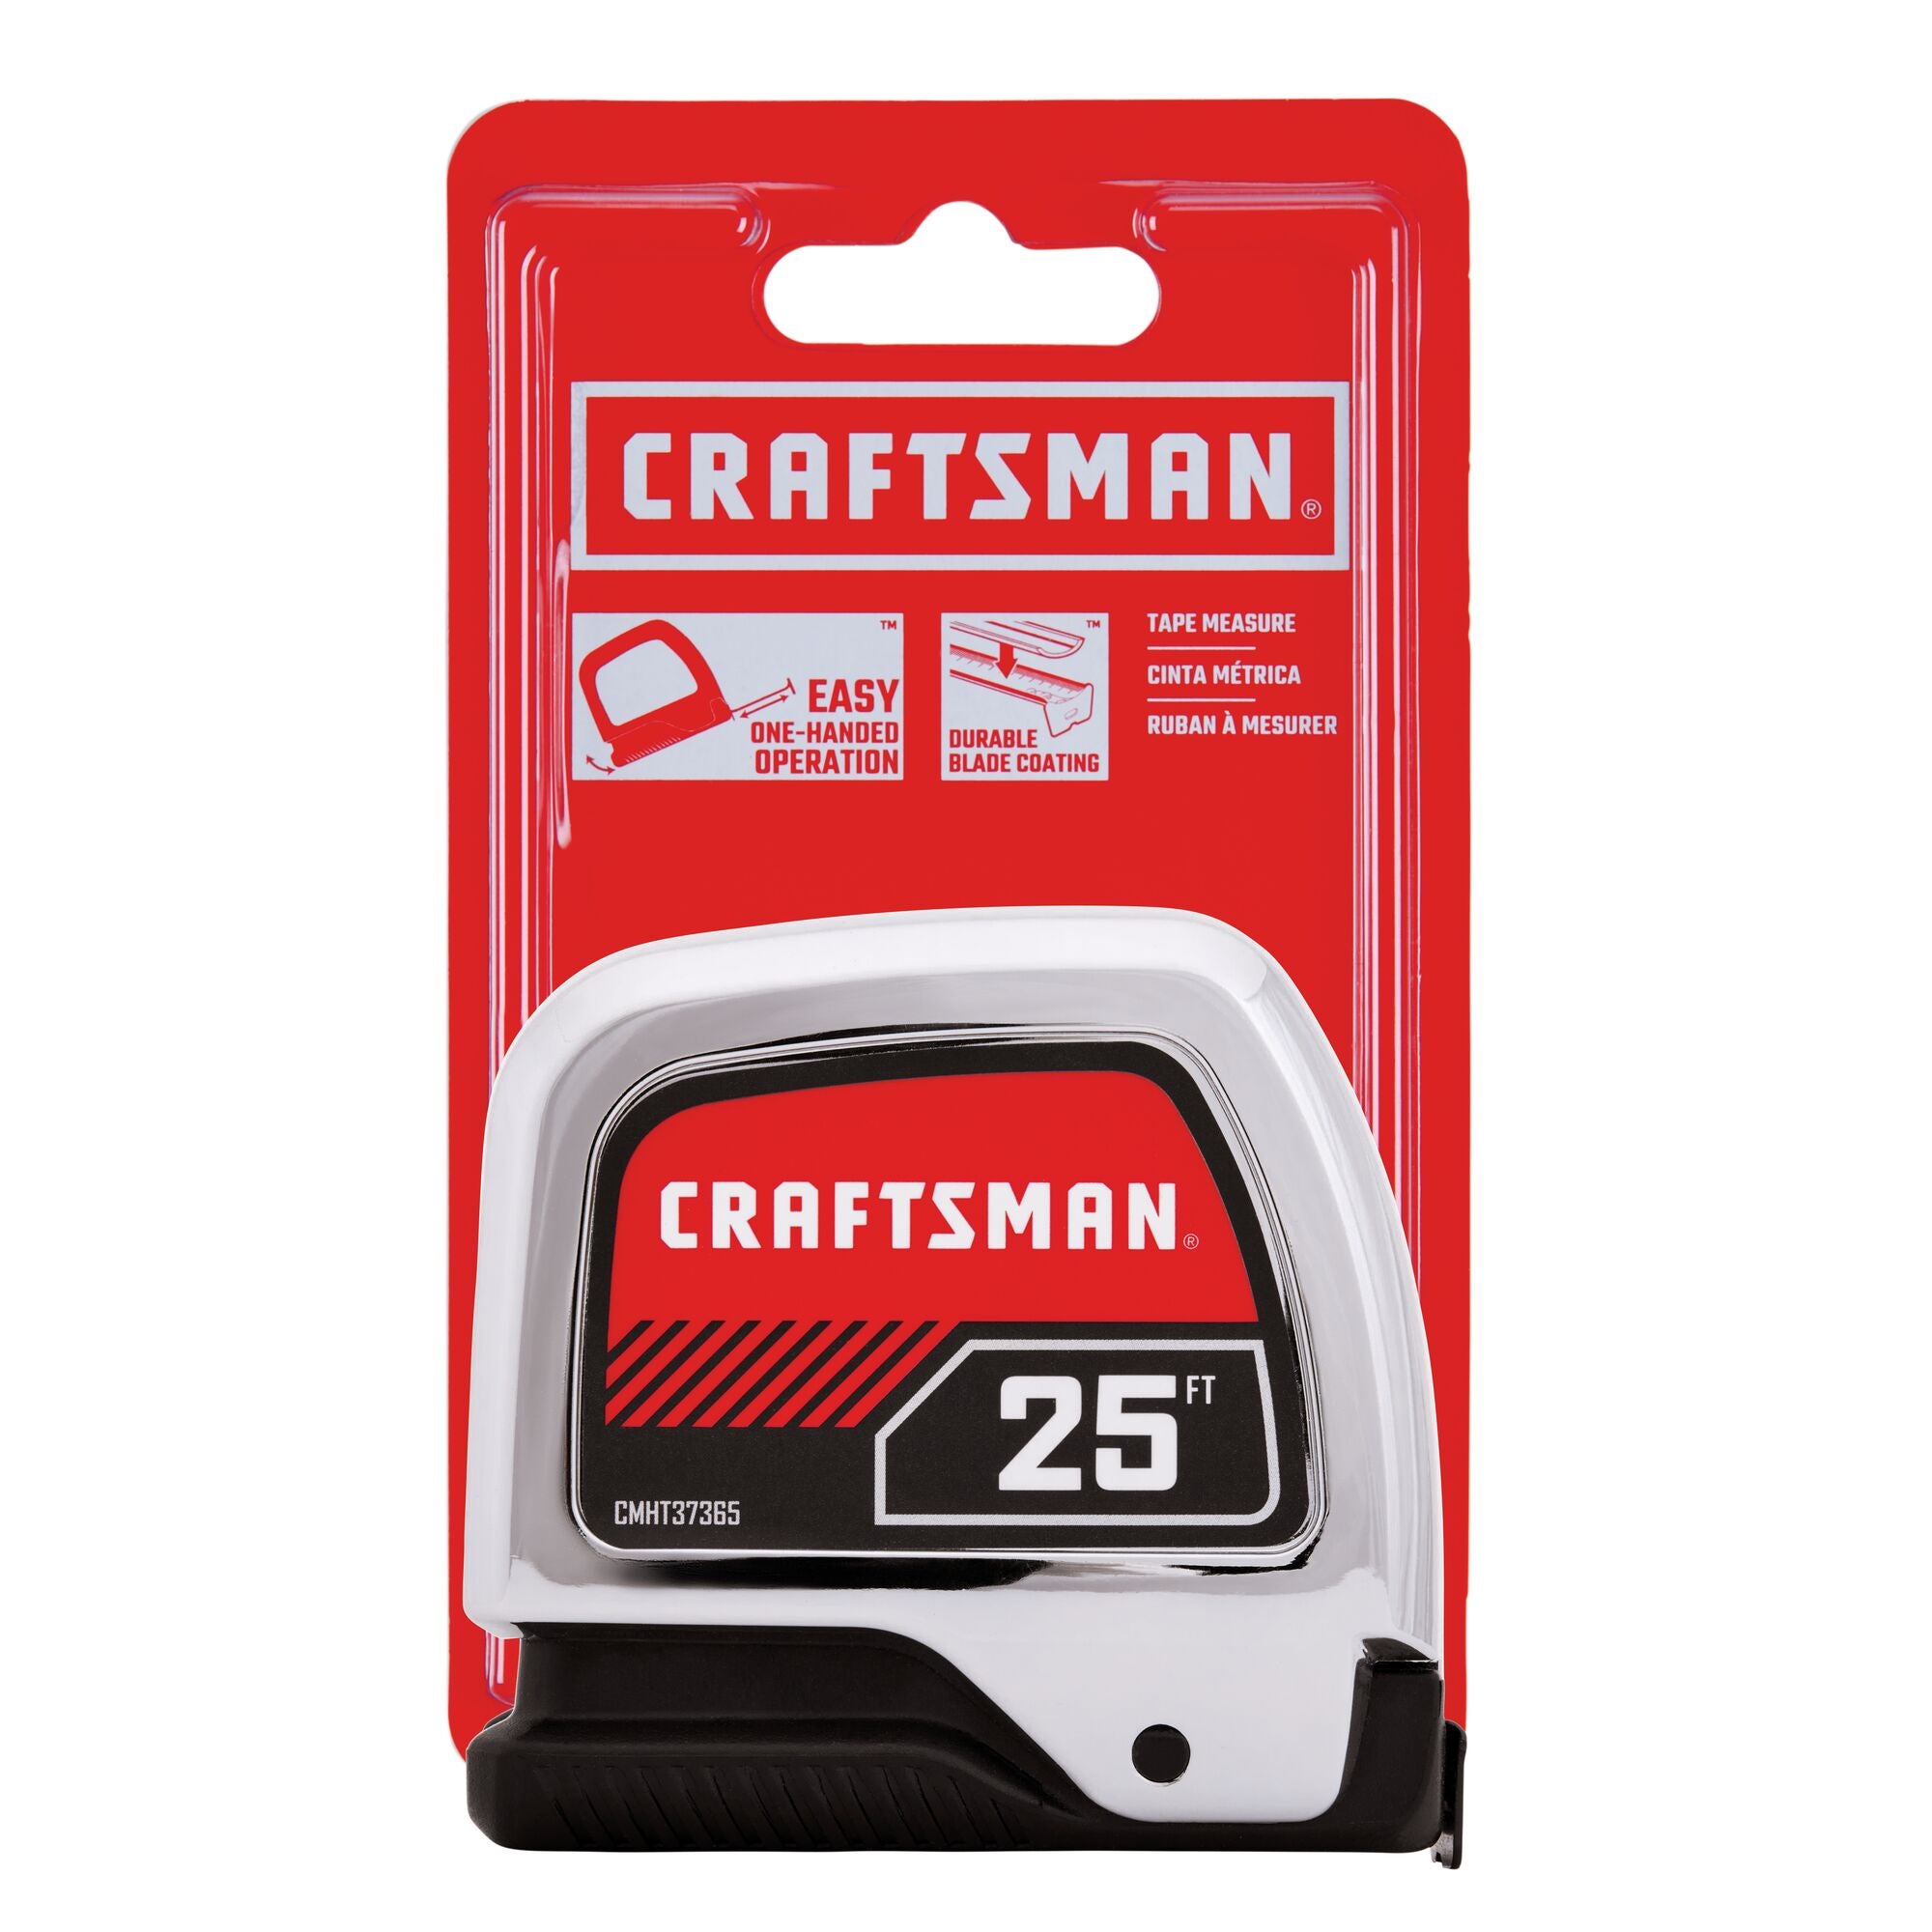 CRAFTSMAN Keychain Tape Measure, 6 FT (CMHT37106G)